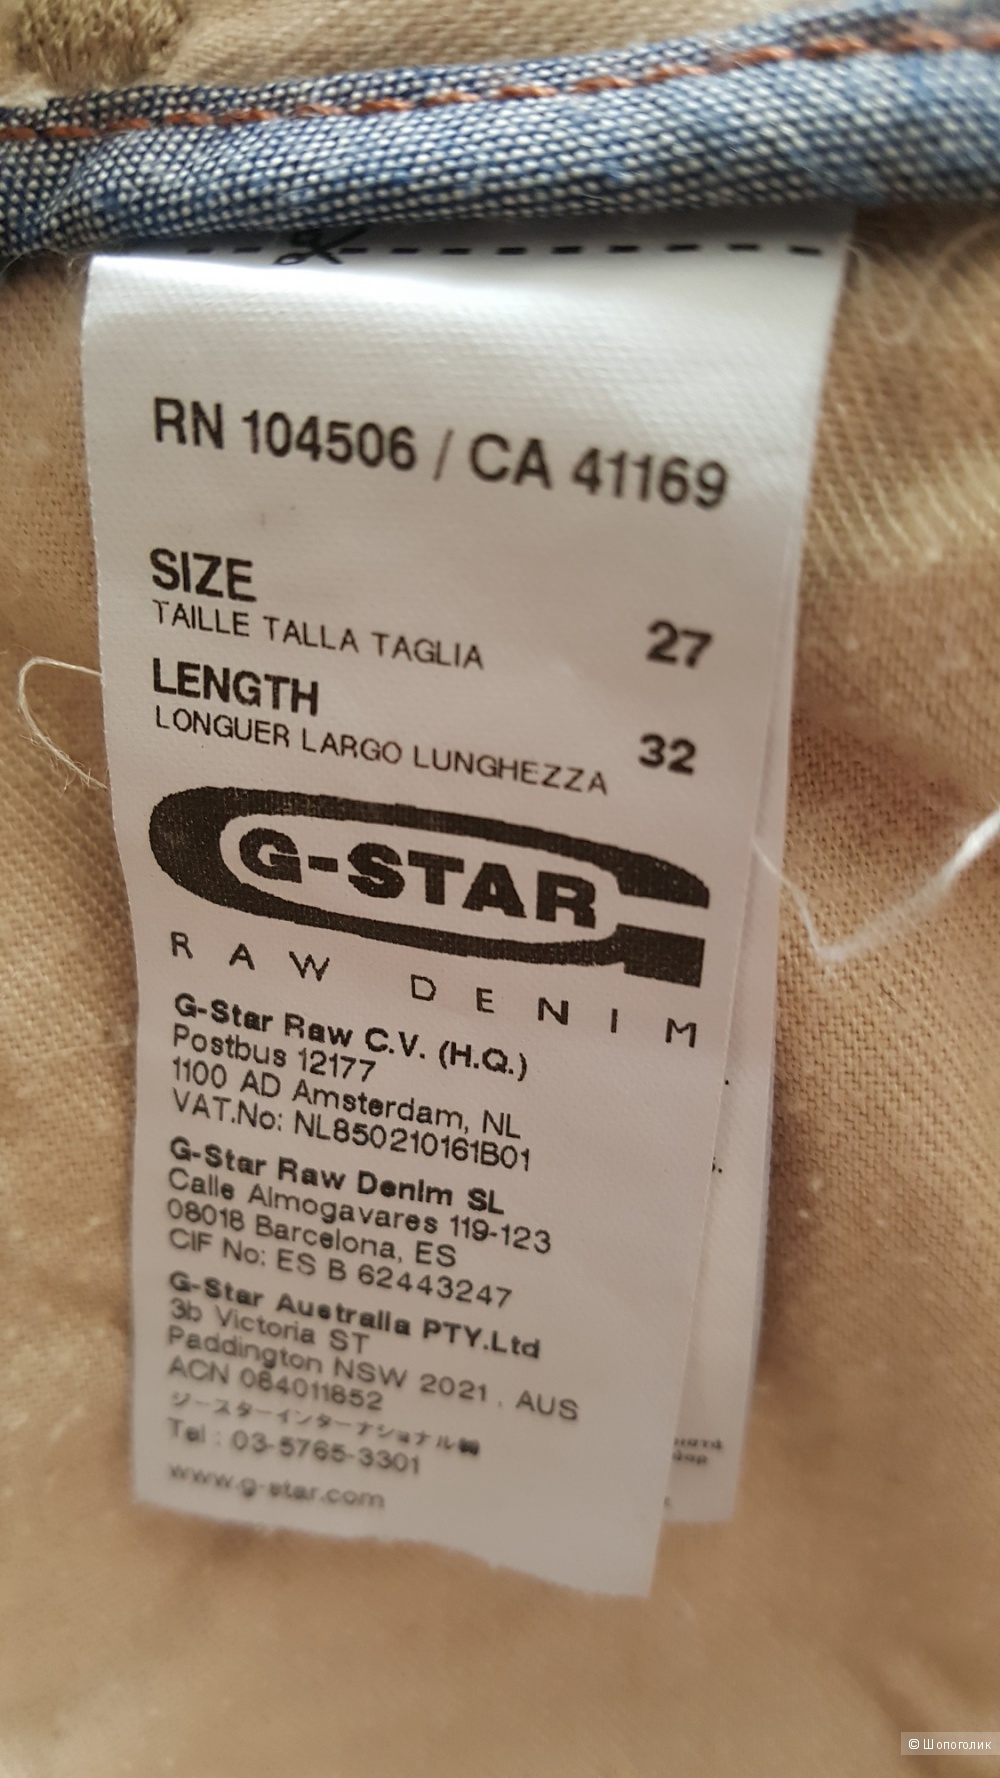 Брюки G-star, 27-32 размера